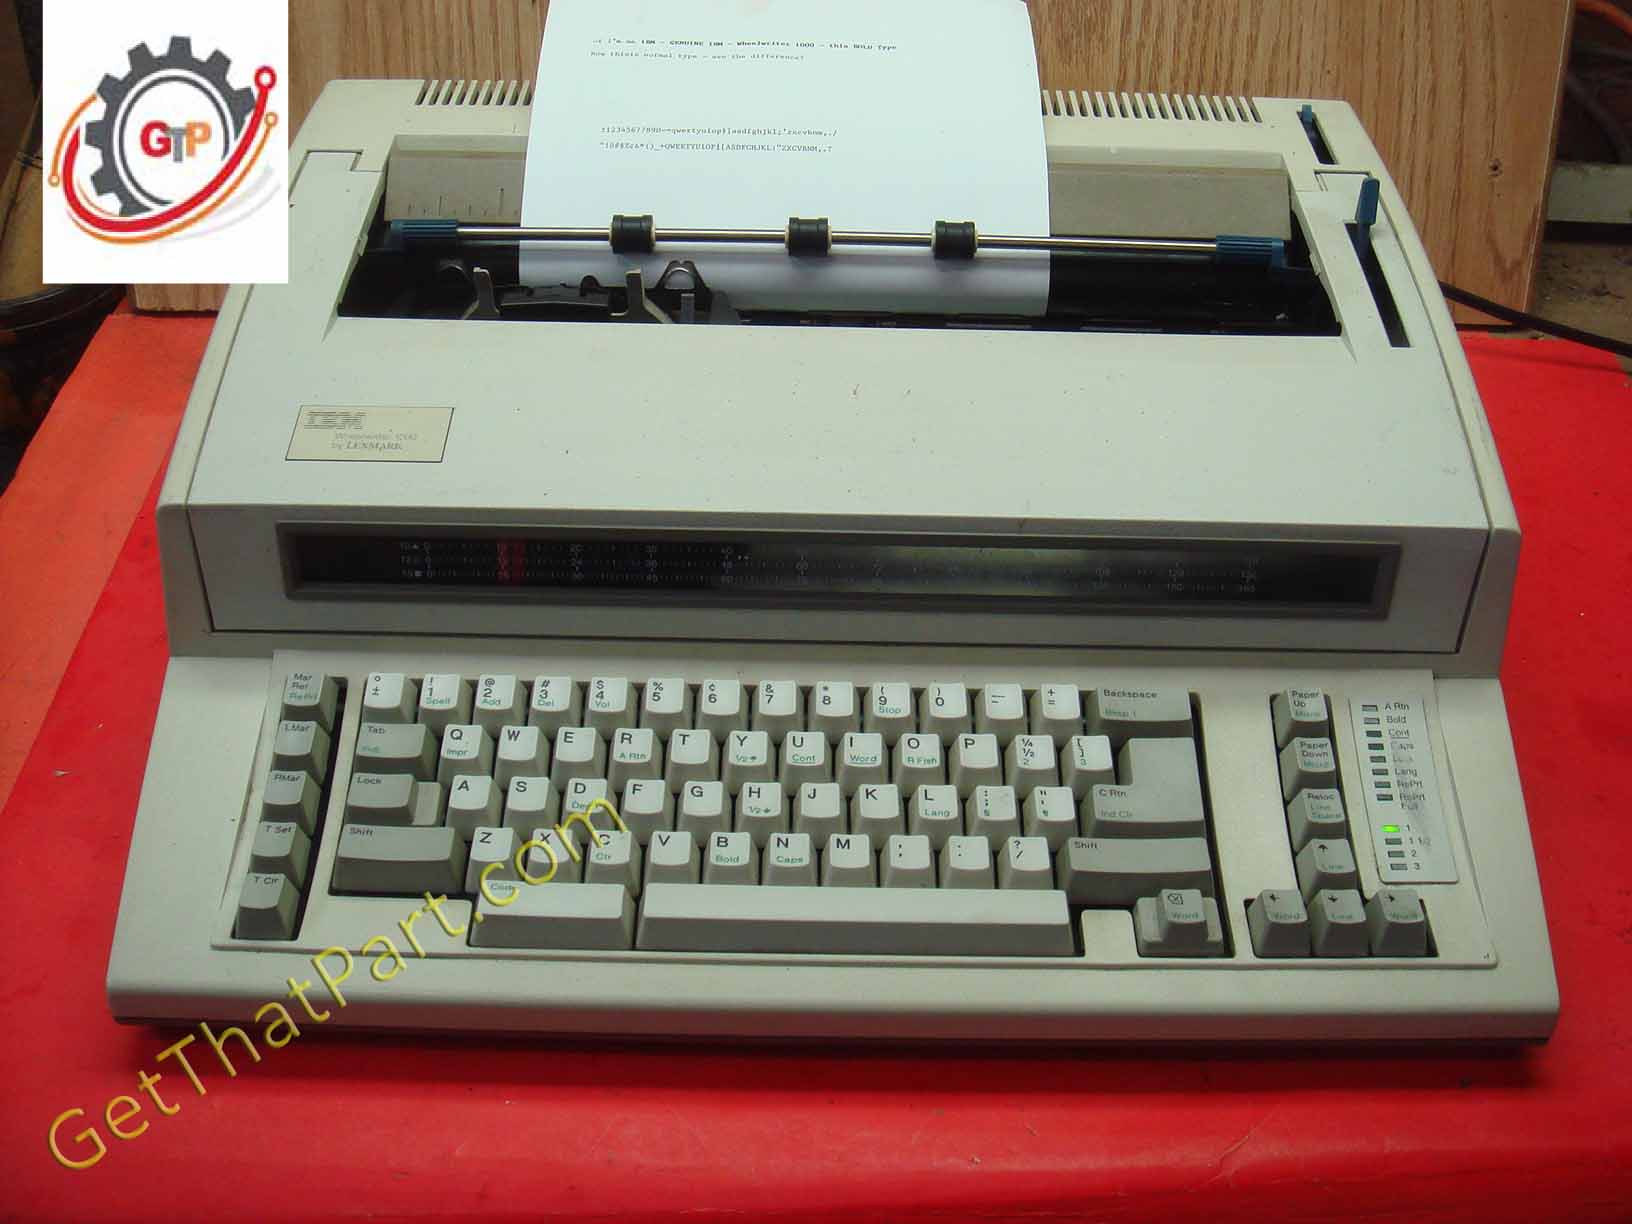 Combo Pack of 1 Typewriter Ribbon & 1 Correction Lift off Tape for IBM Lexmark Wheelwriter 2500 Typewriter by Around The Office 